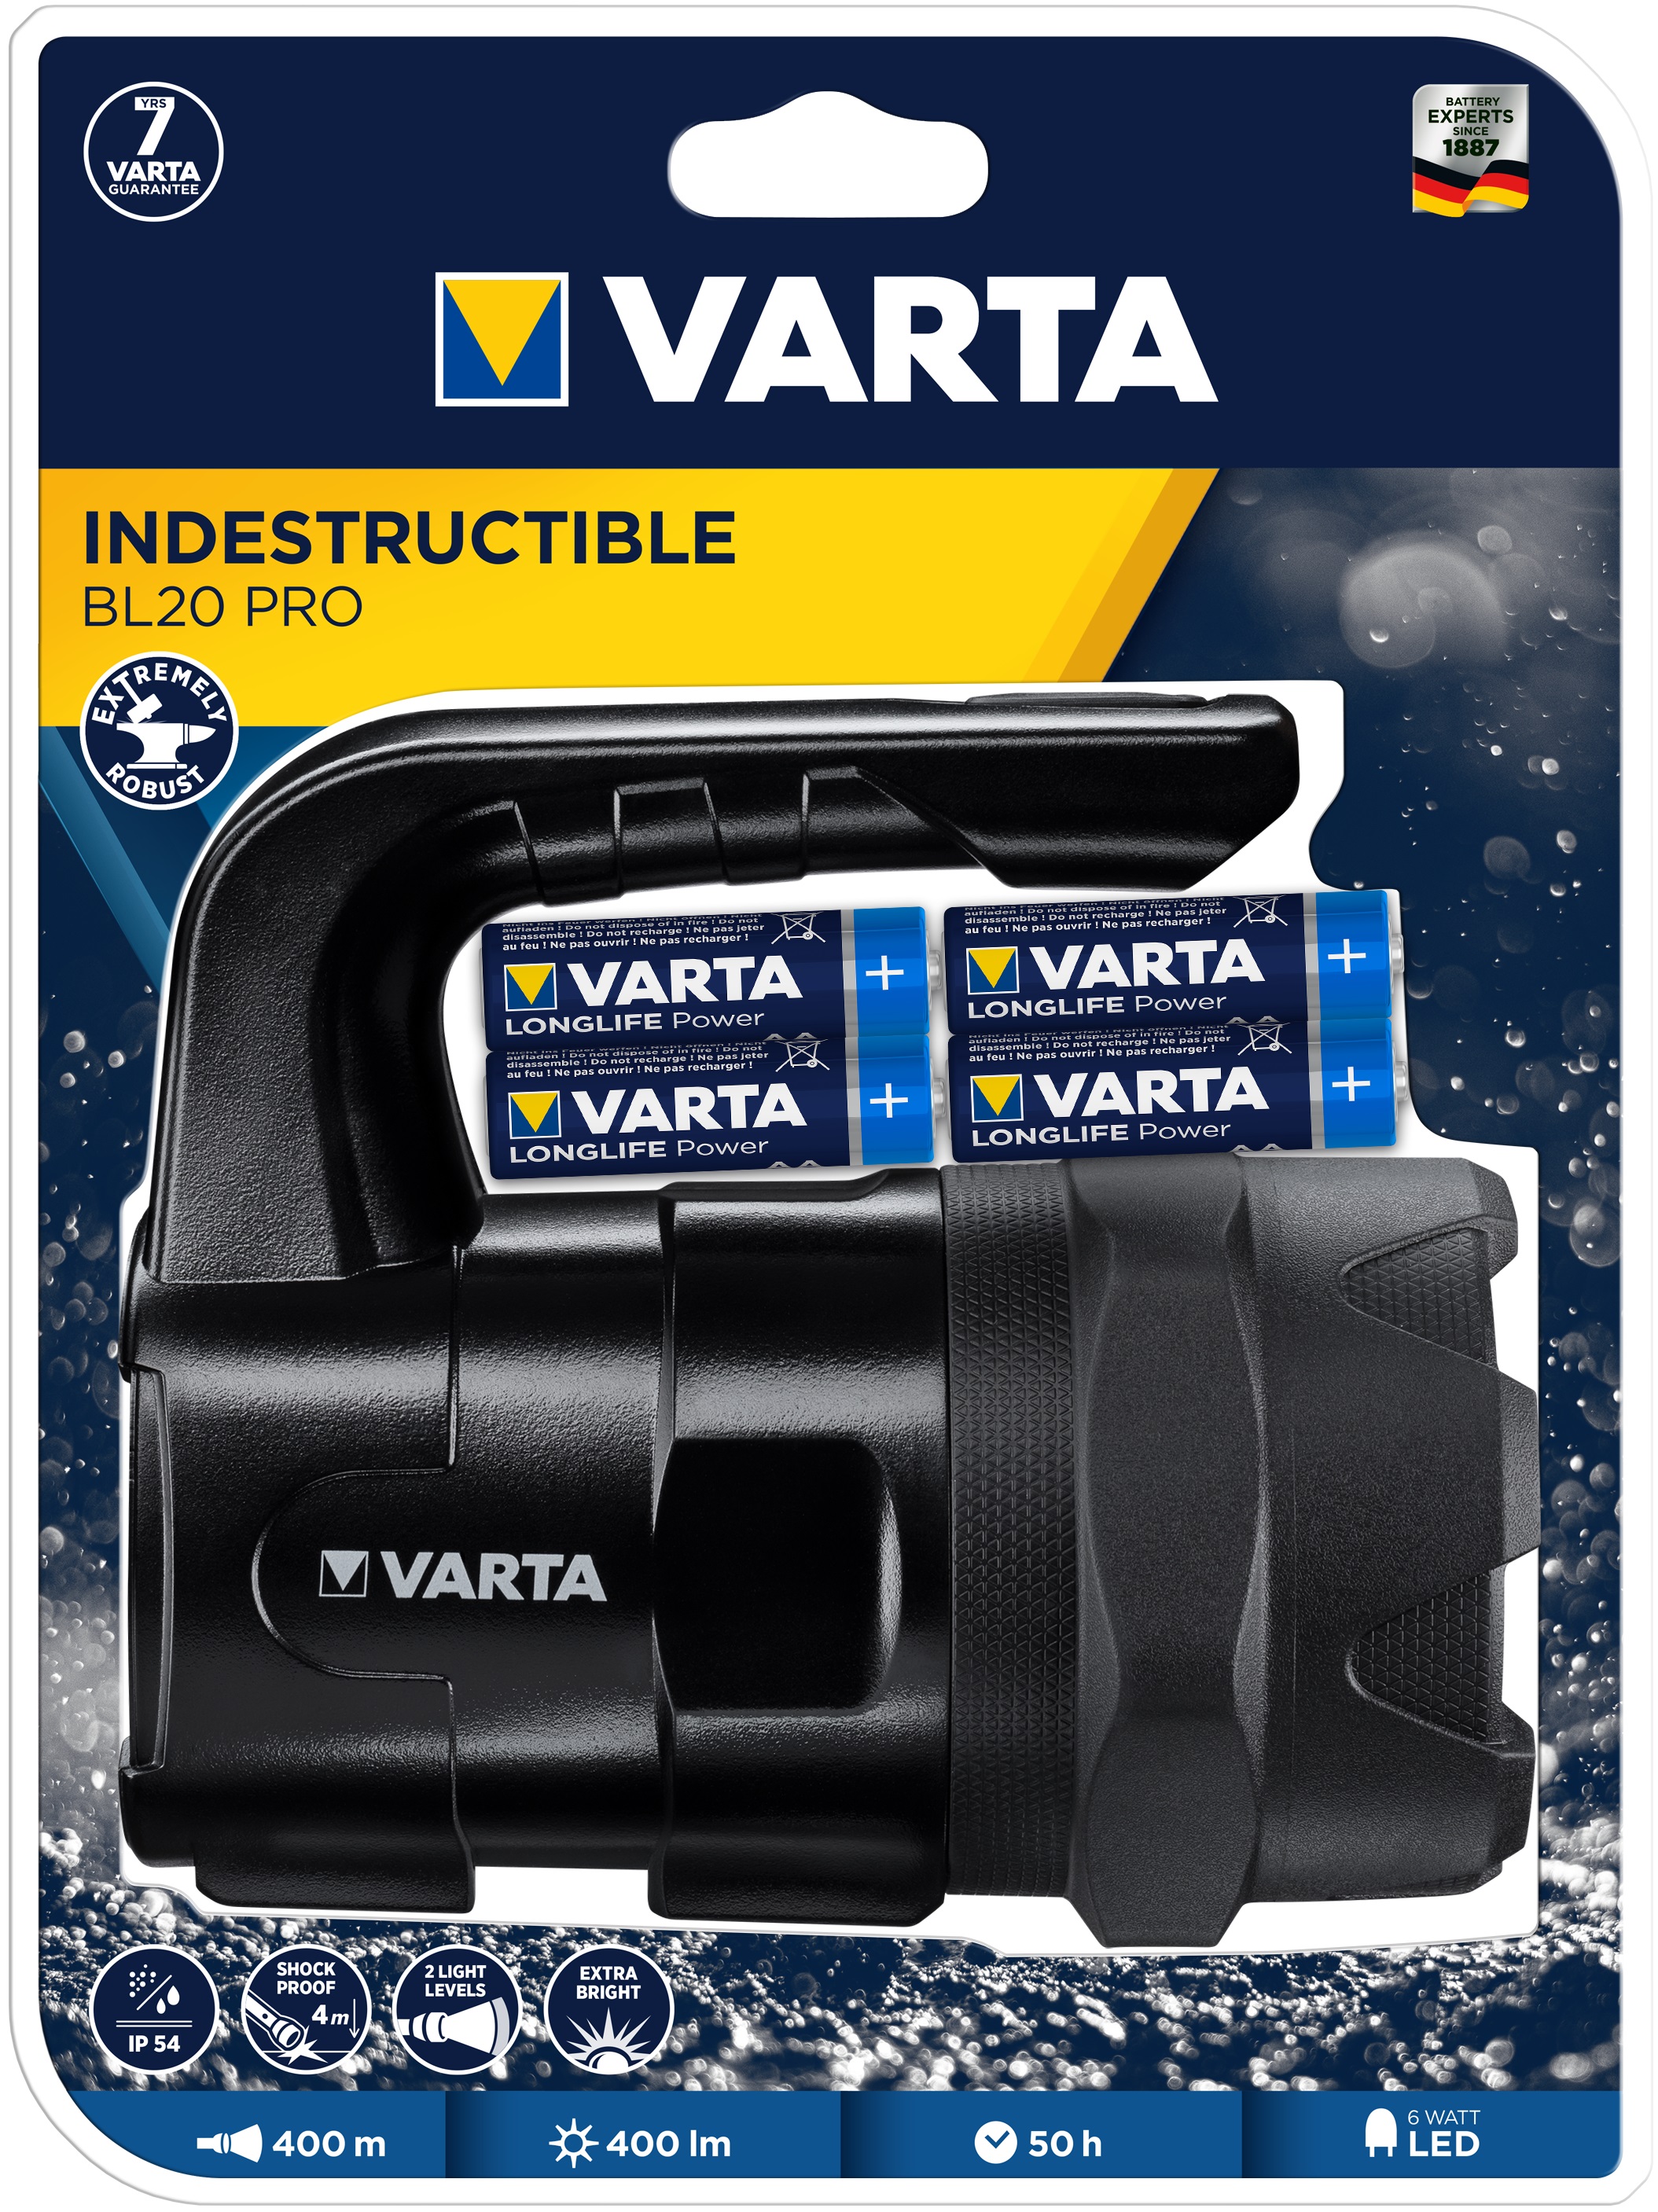 VARTA PROJECTEUR indestructible LED + 6AA fournies VARTA